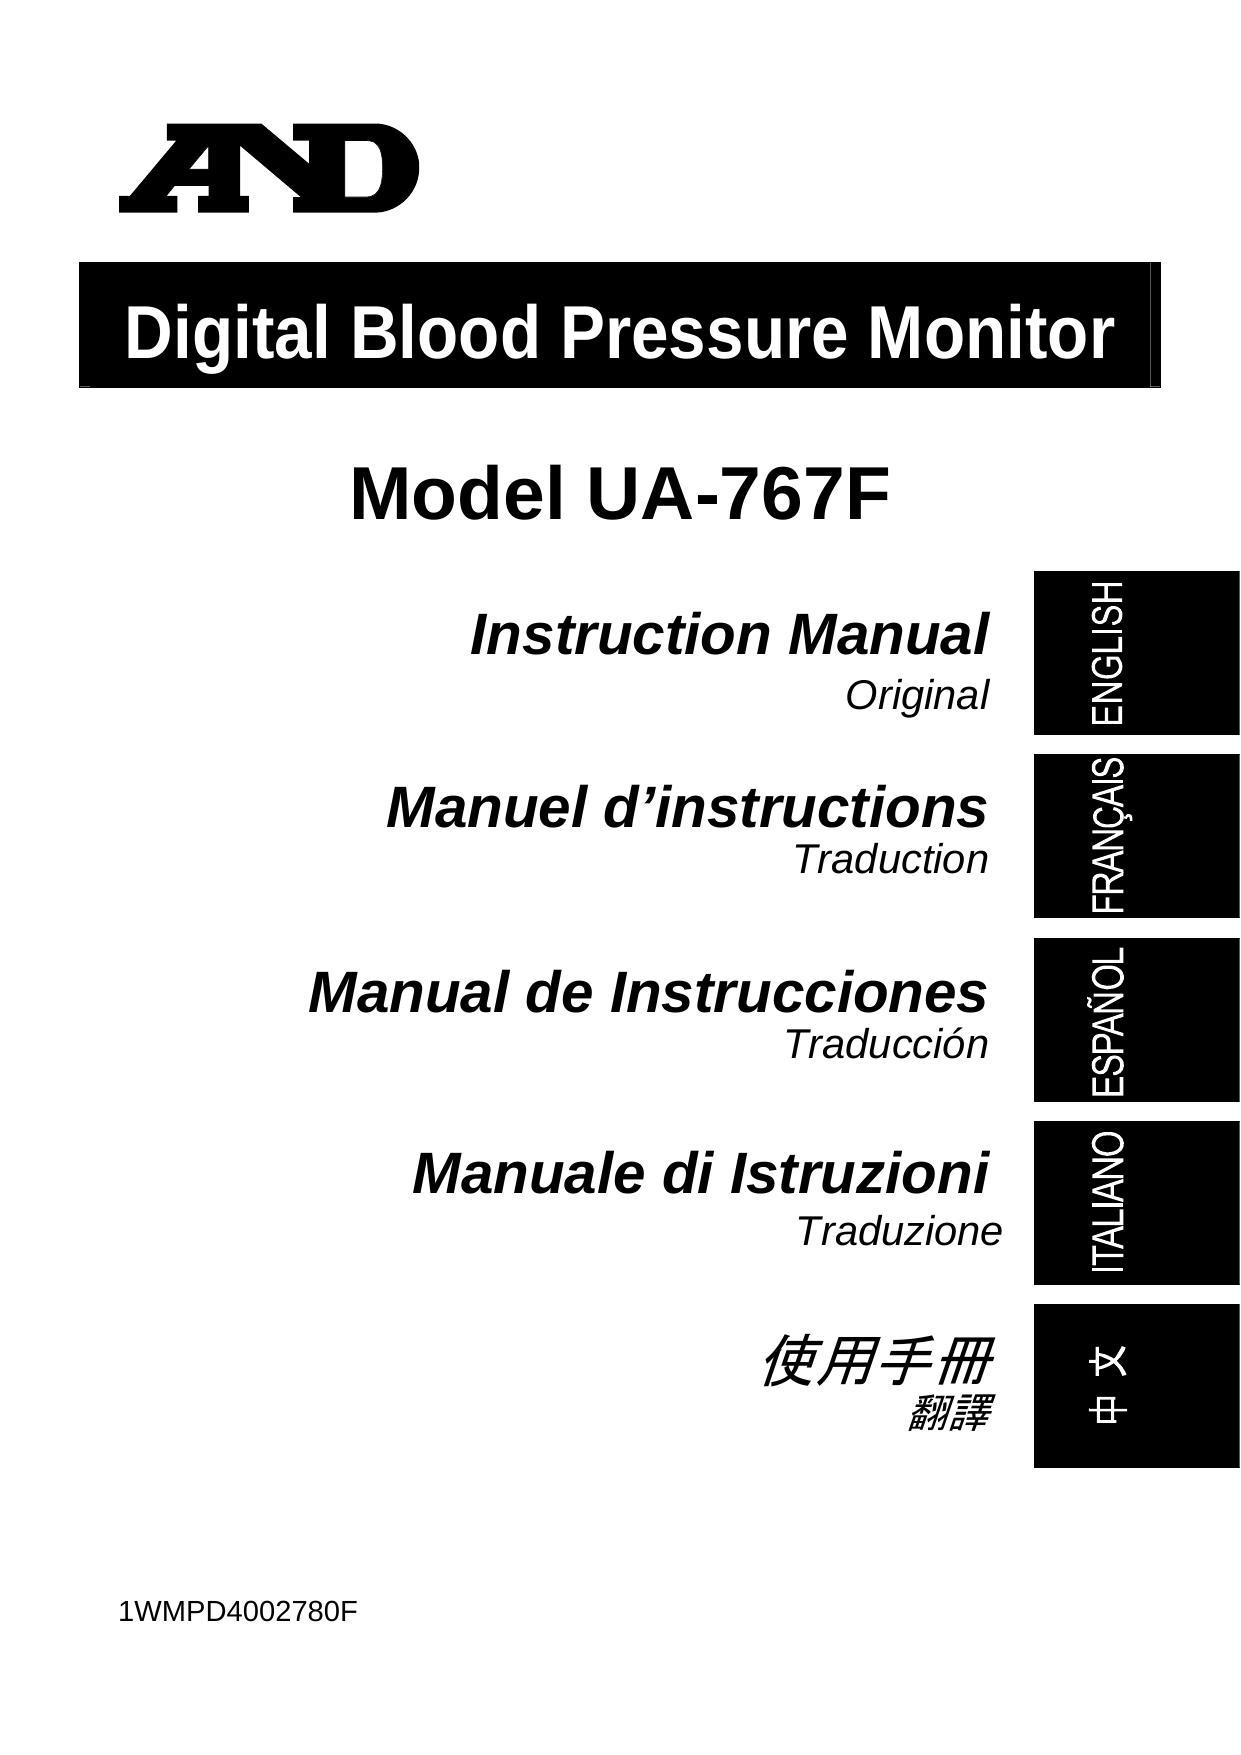 ad-digital-blood-pressure-monitor-model-ua-767f-instruction-manual.pdf